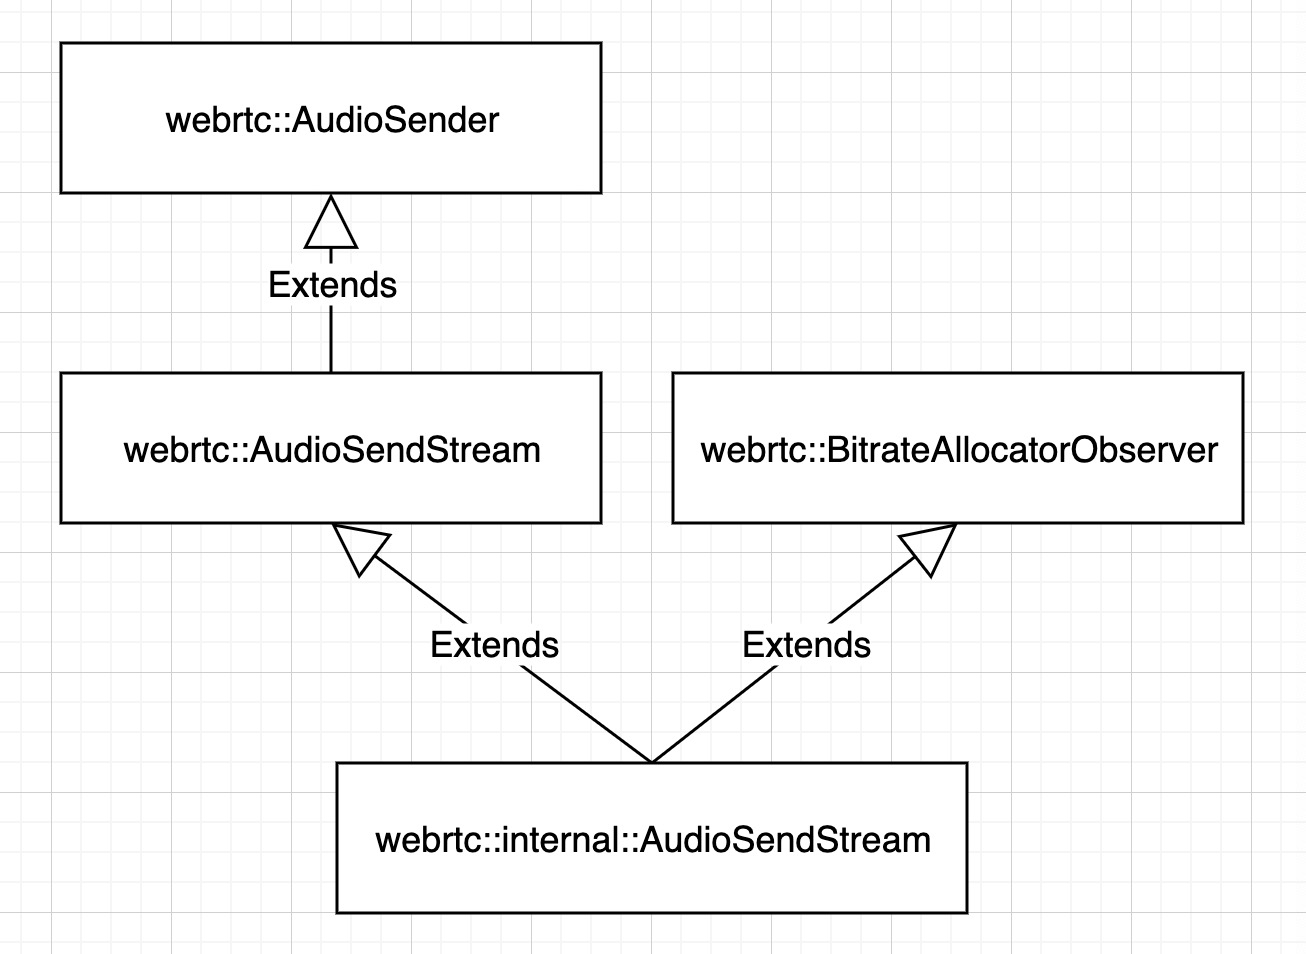 webrtc::AudioSender/webrtc::AudioSendStream